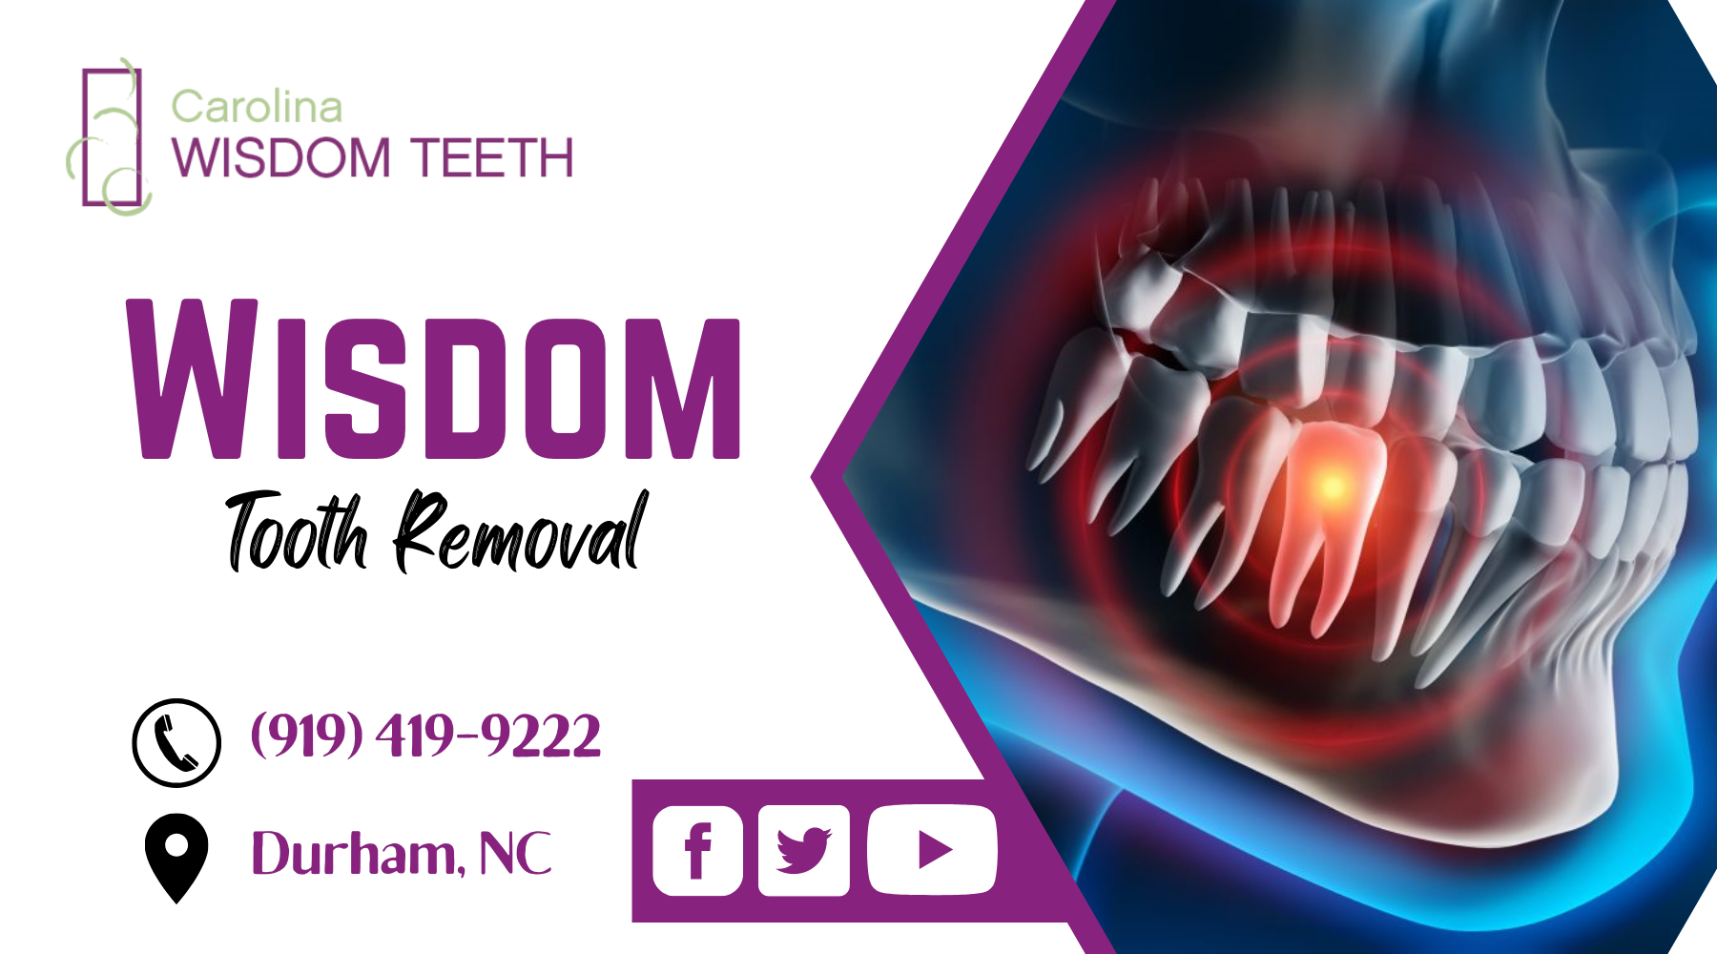 Carolina Wisdom Teeth on Gab: 'Restore the Permanent Teeth by Pain-Free Procedur…' - Gab Social